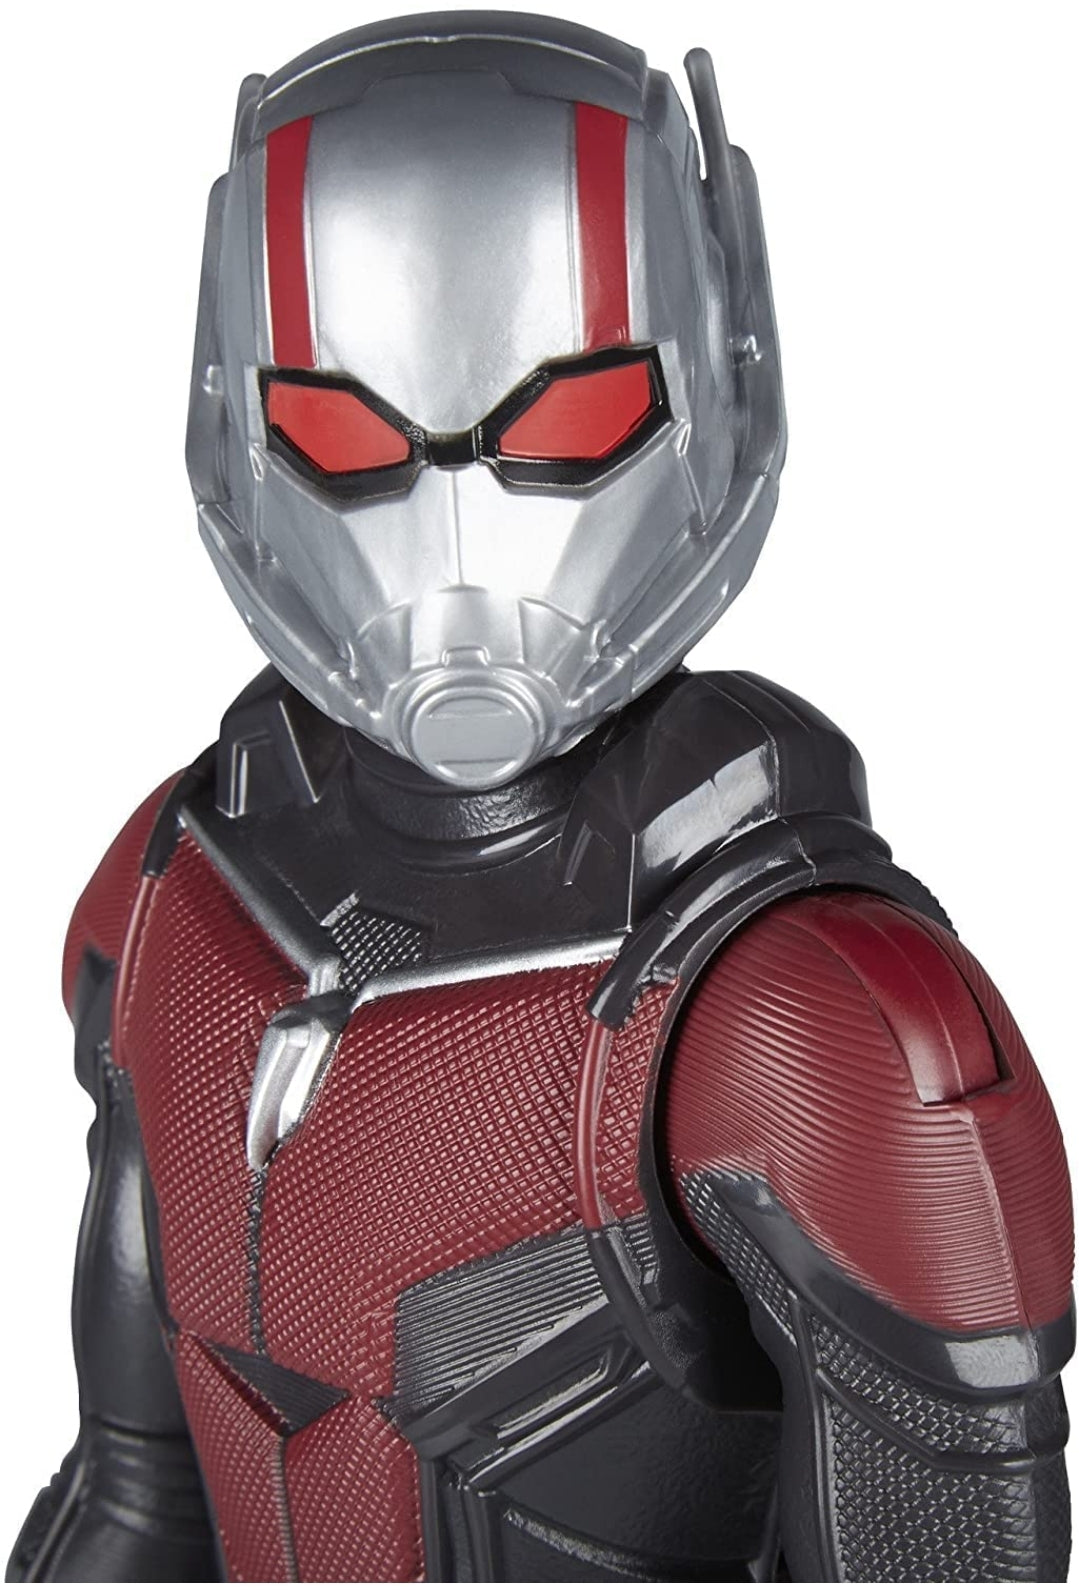 New *ANT-MAN Marvel Avengers Titan Hero Series 12" Action Figure